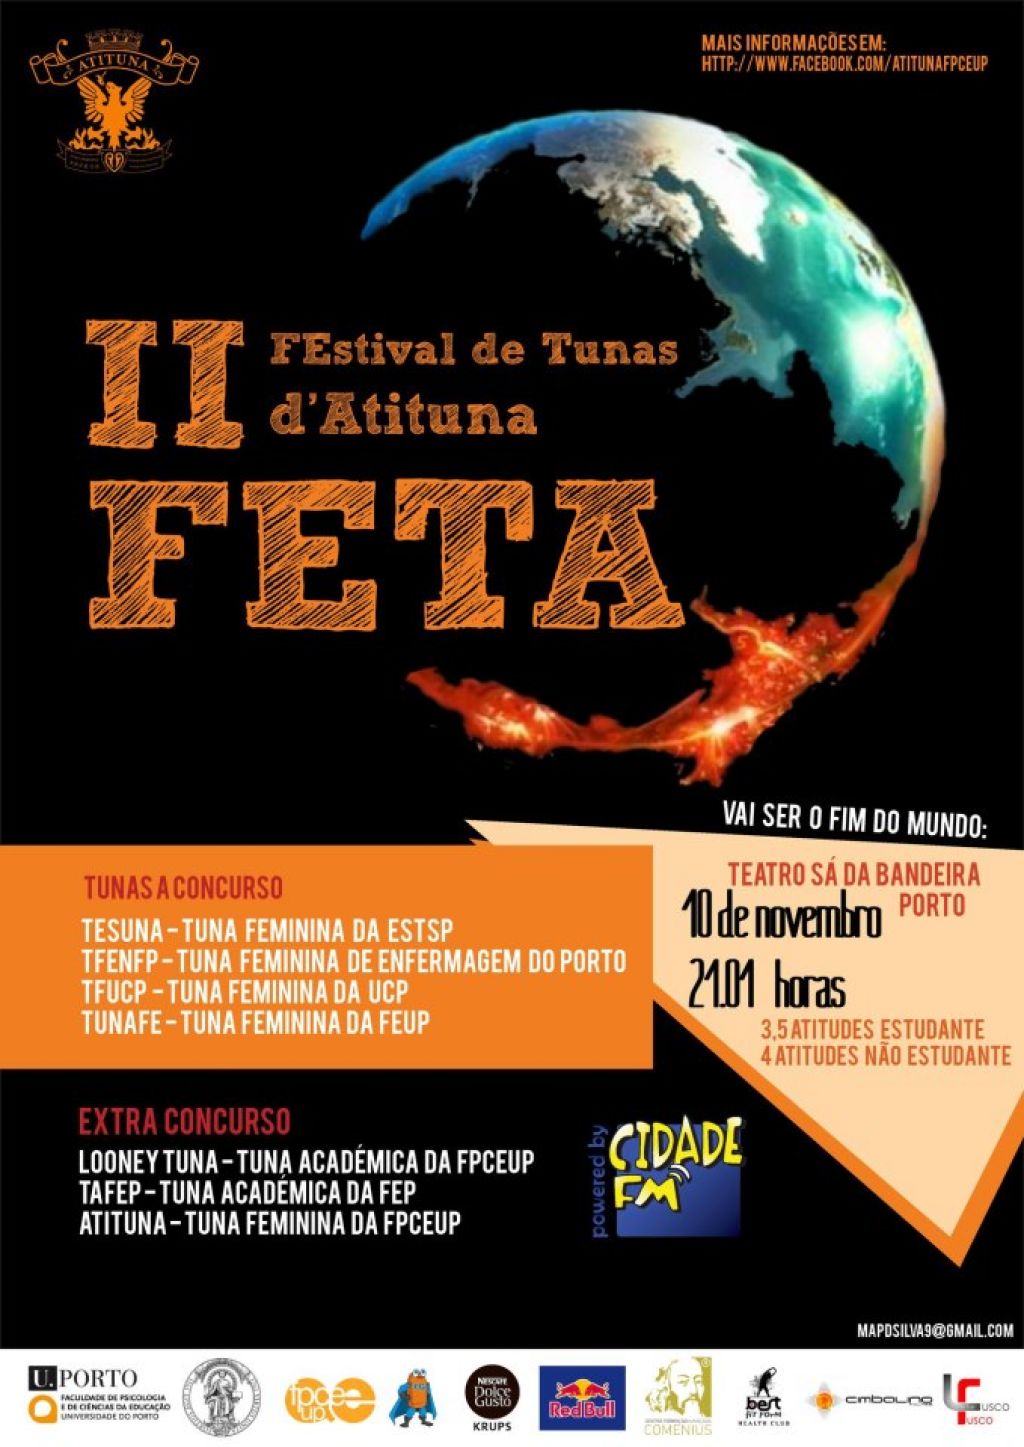 II FETA - Festival de Tunas d'Atituna